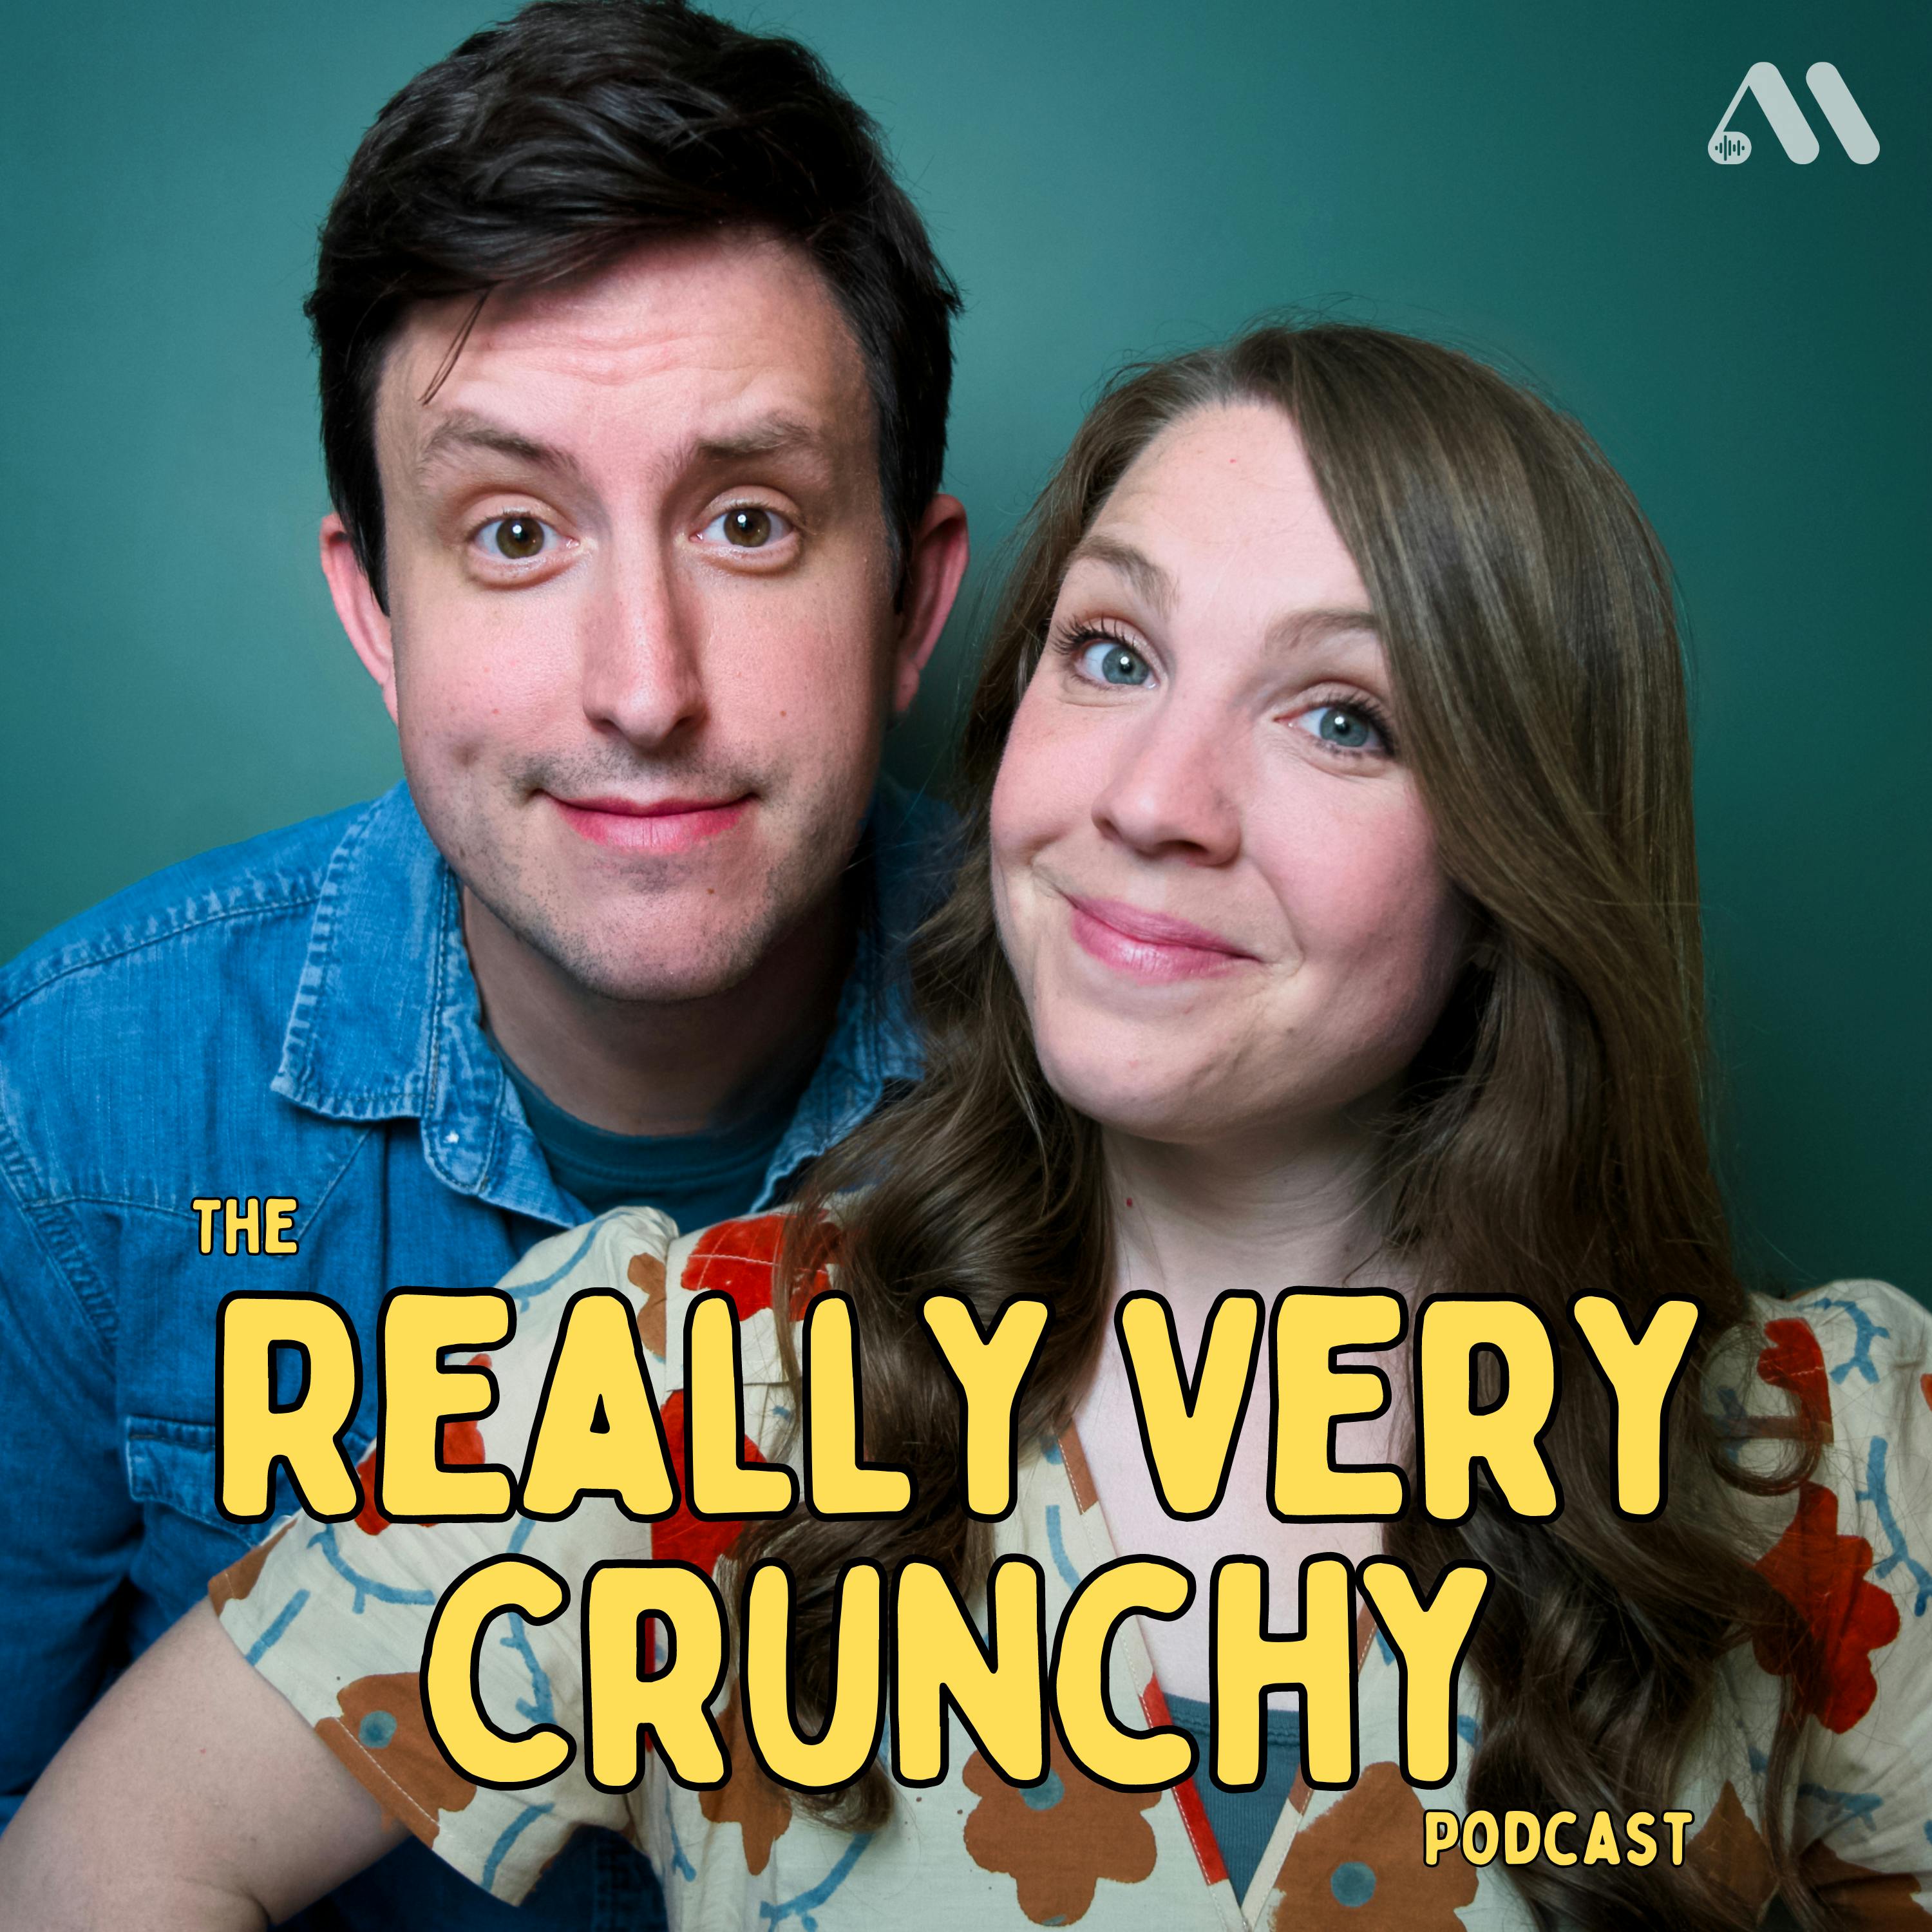 The Really Very Crunchy Podcast